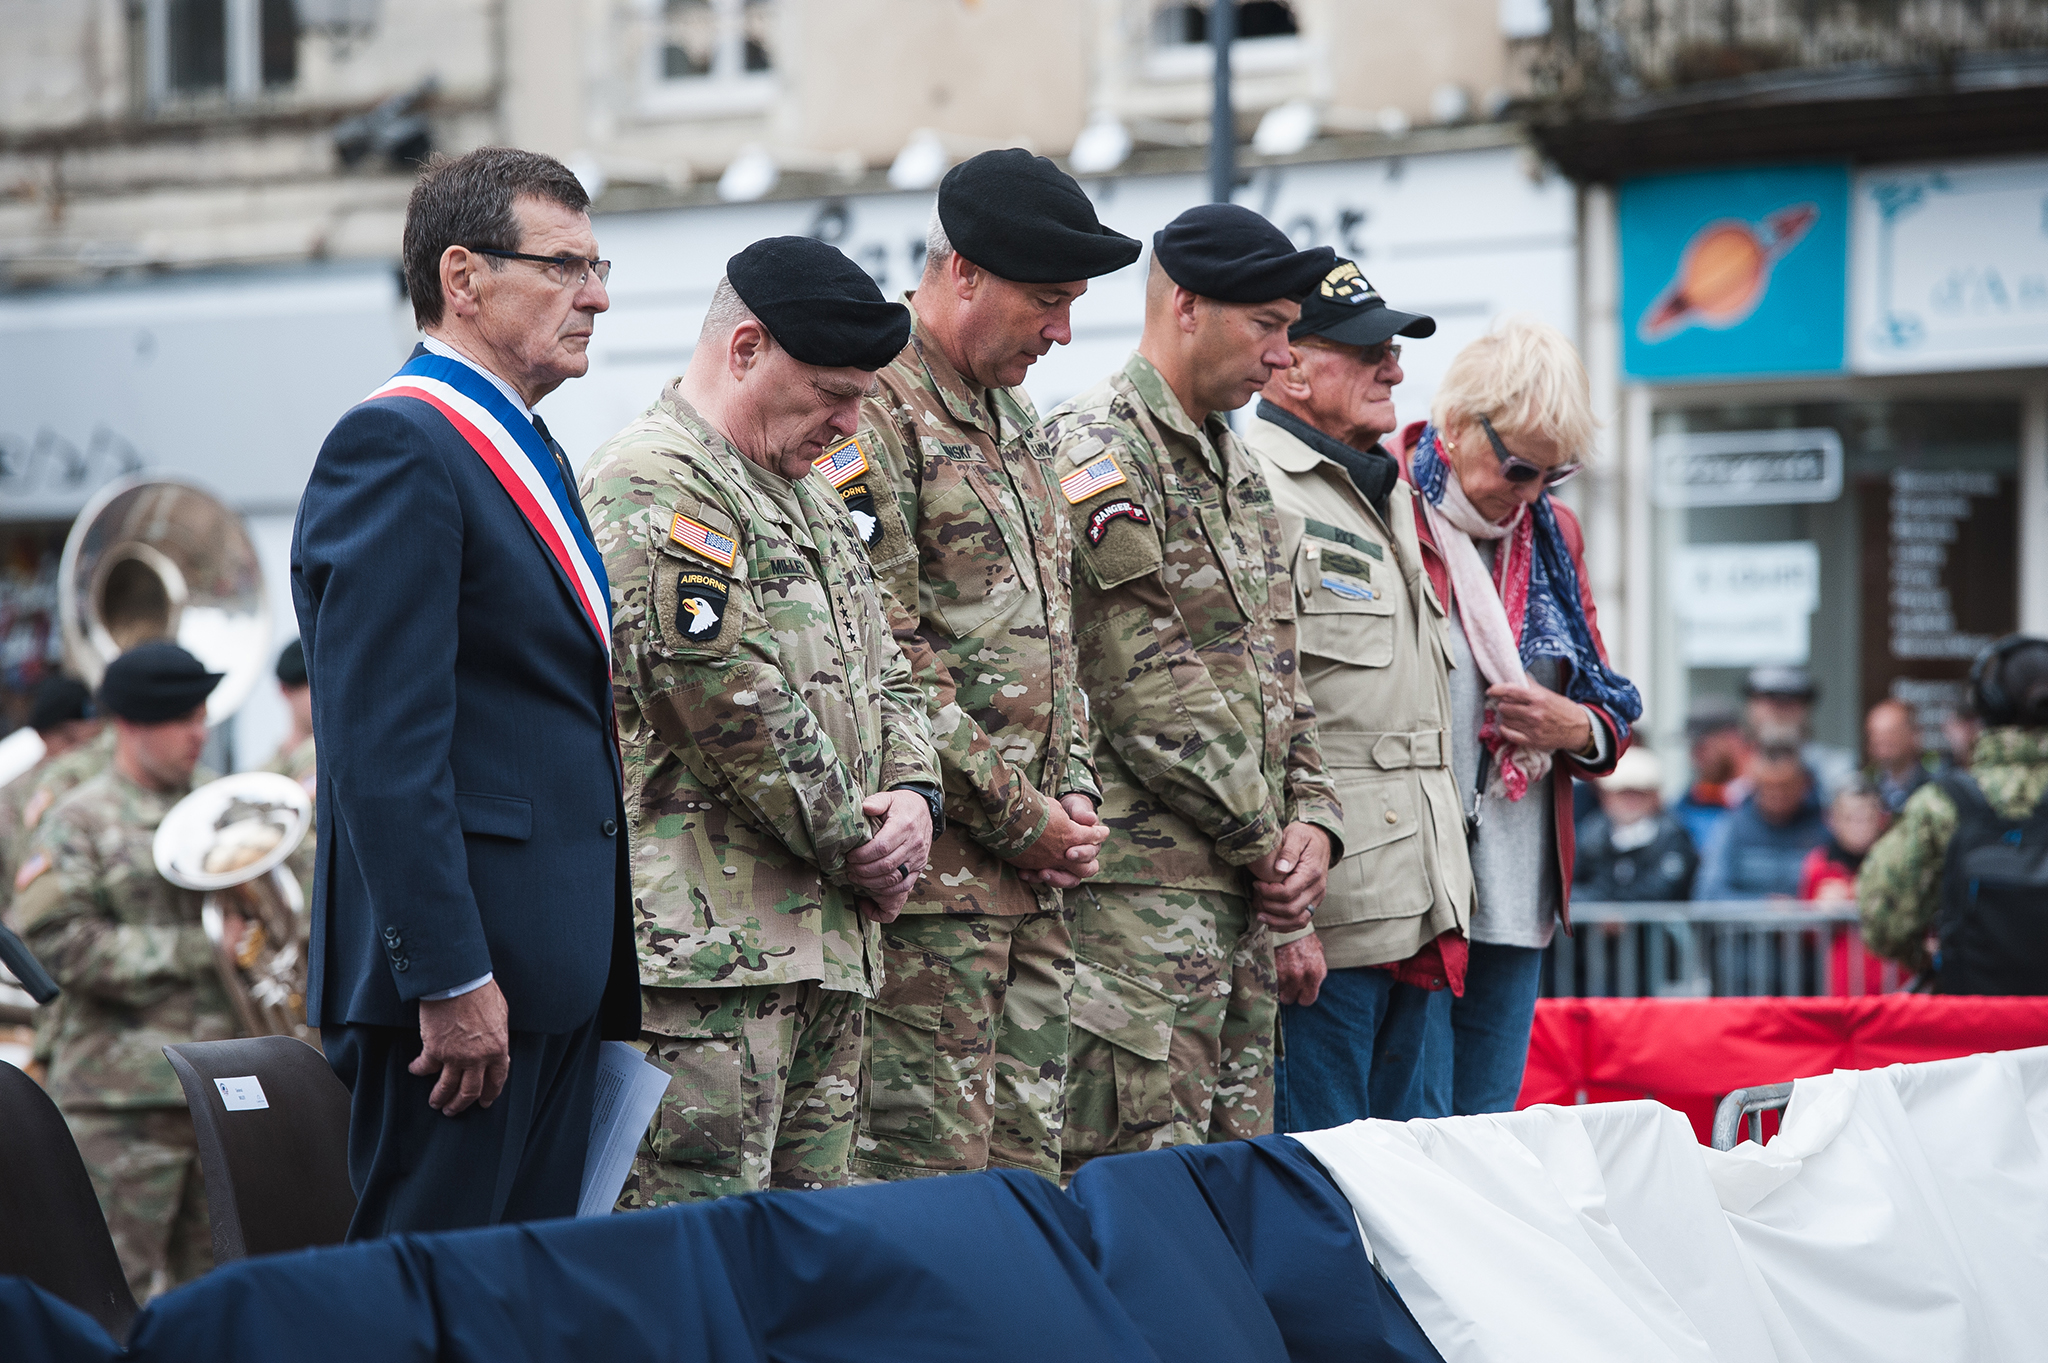 101st Airborne Division ceremony in Carentan, France